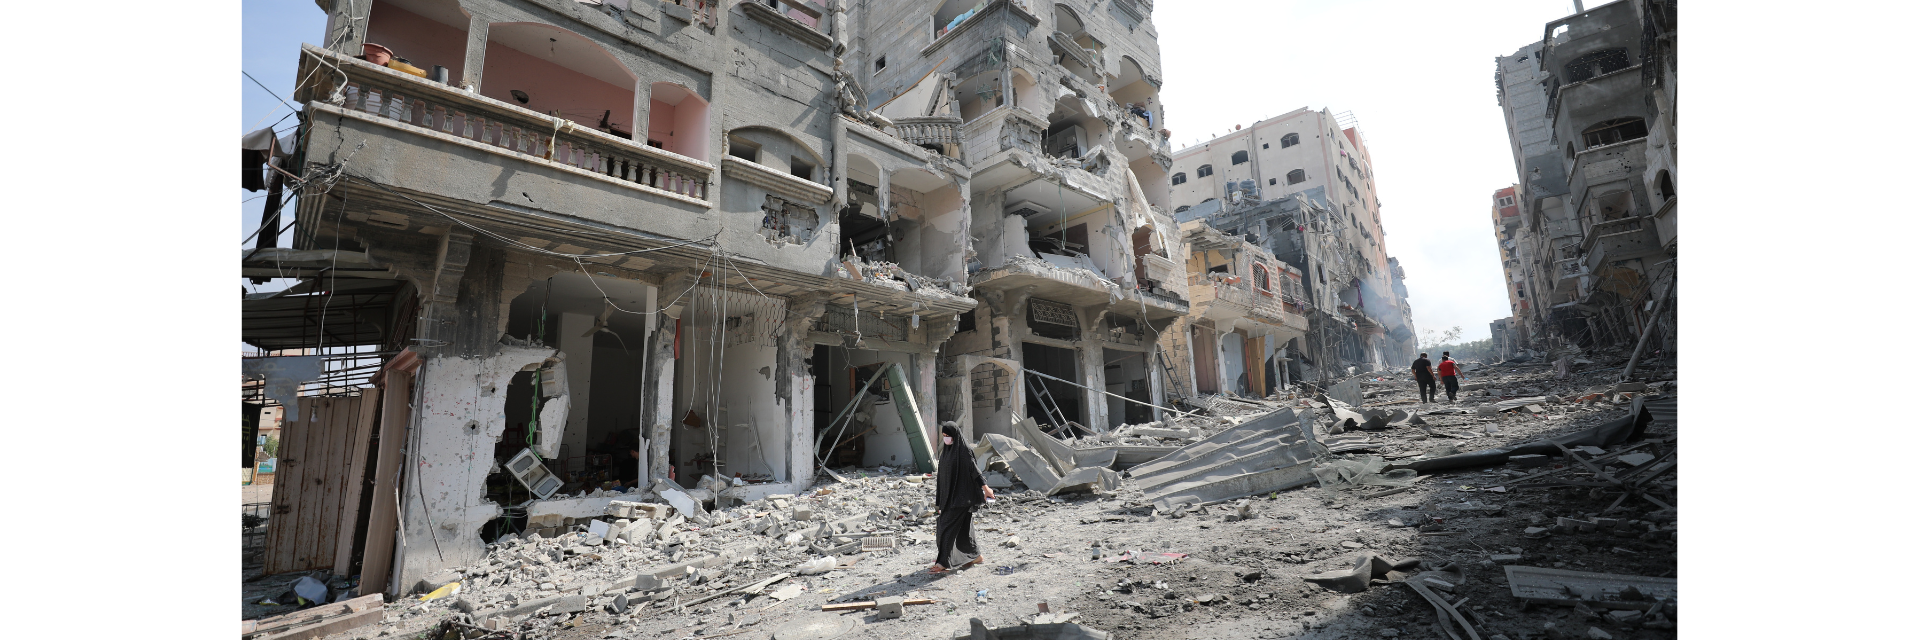 ruines de Gaza - crise humanitaire